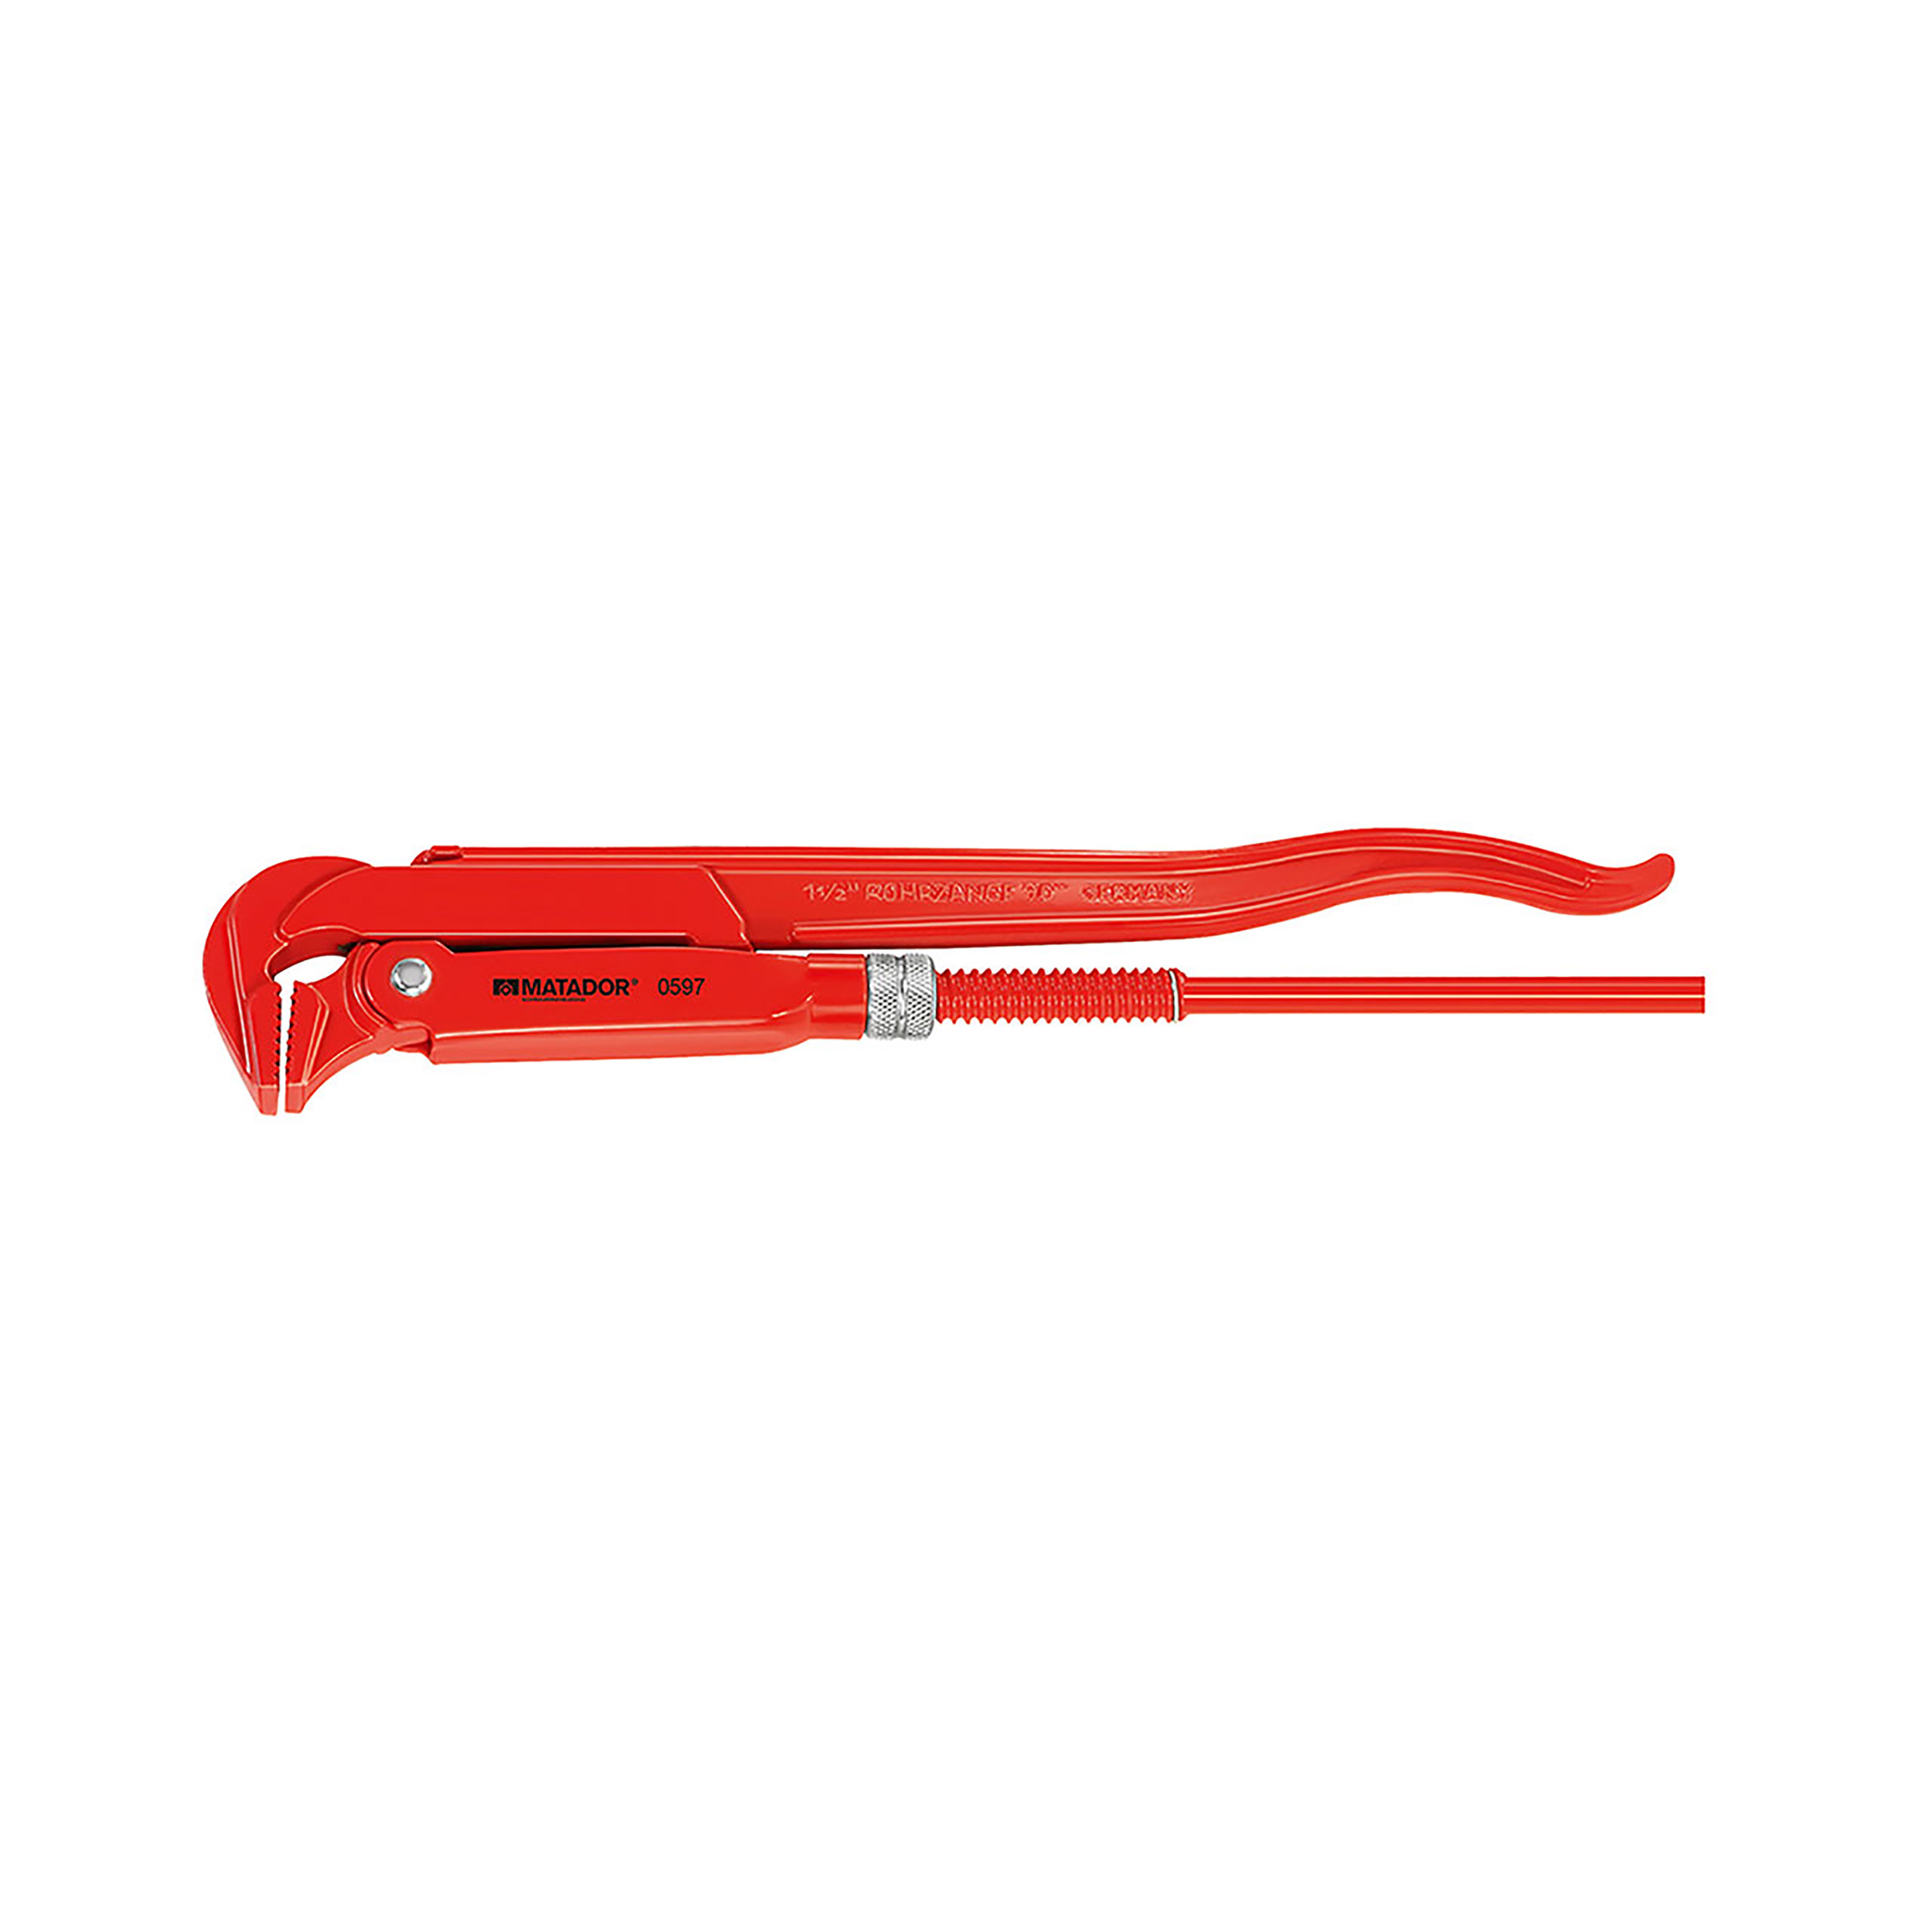 Pipe wrench 90°, DIN 5234, form A, 10-105 mm (3"), MATADOR item no.: 05970004